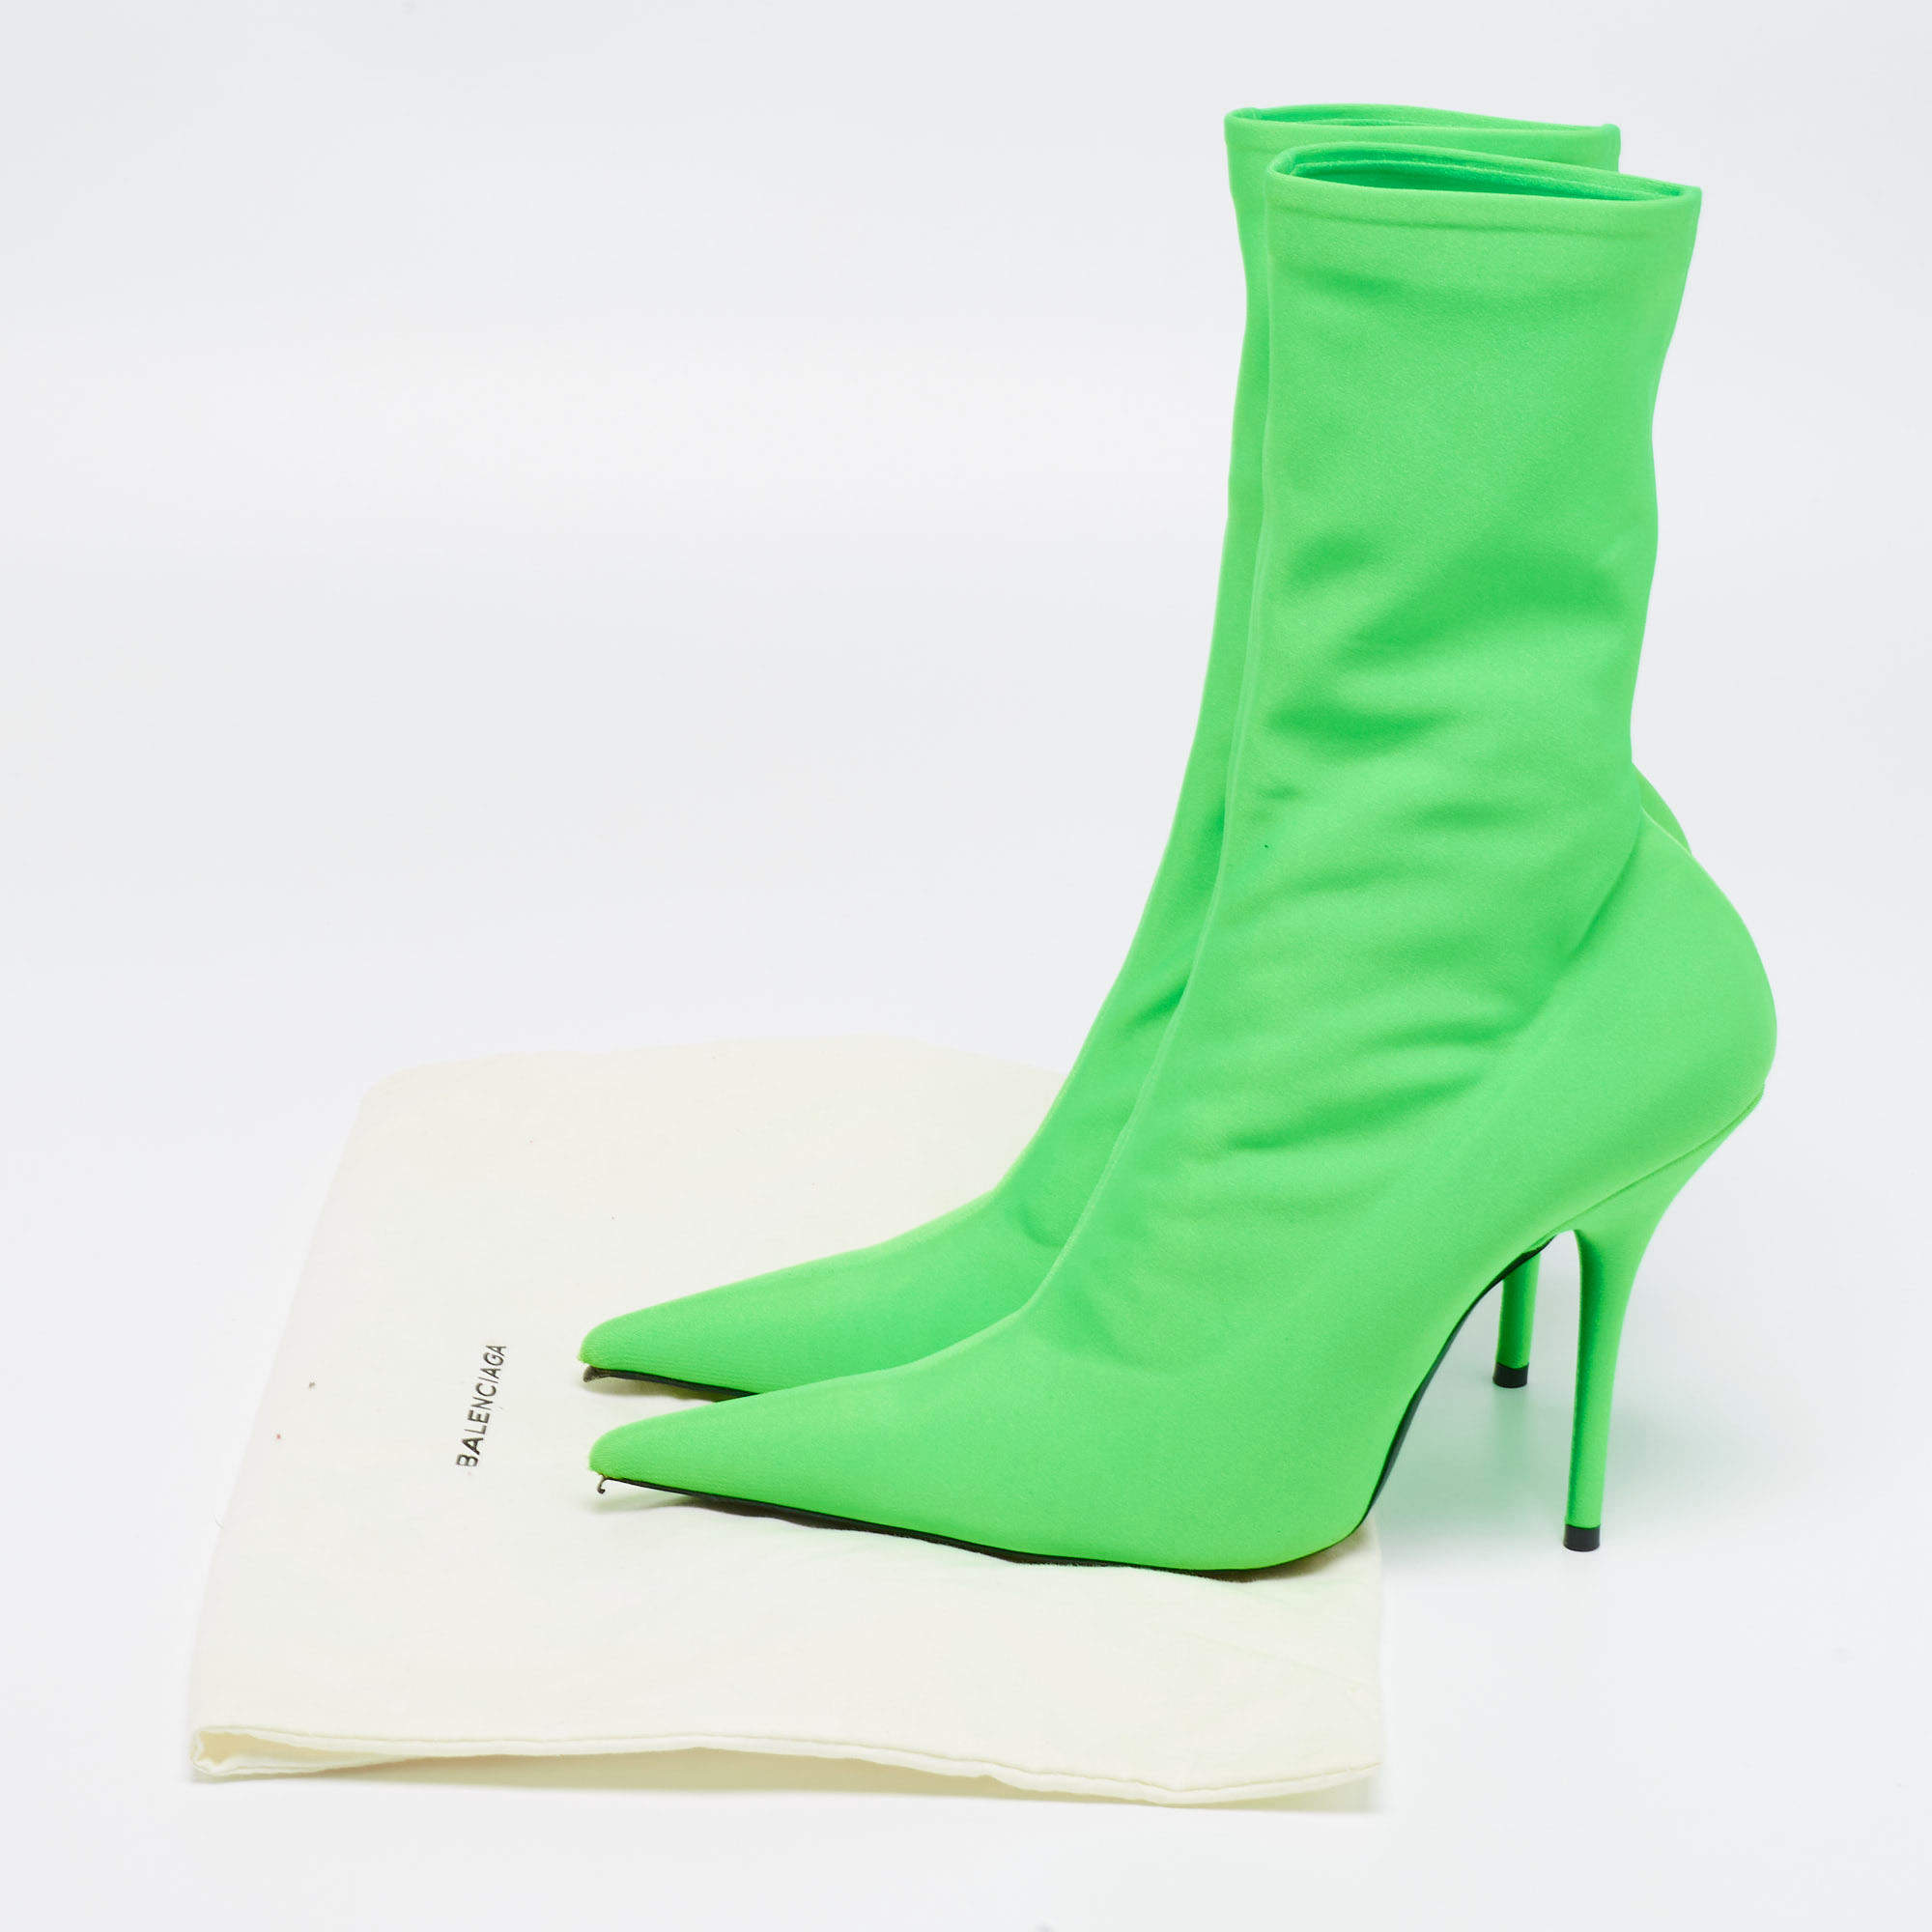 Balenciaga Croc Boots green color womens size 36 C size 6  eBay